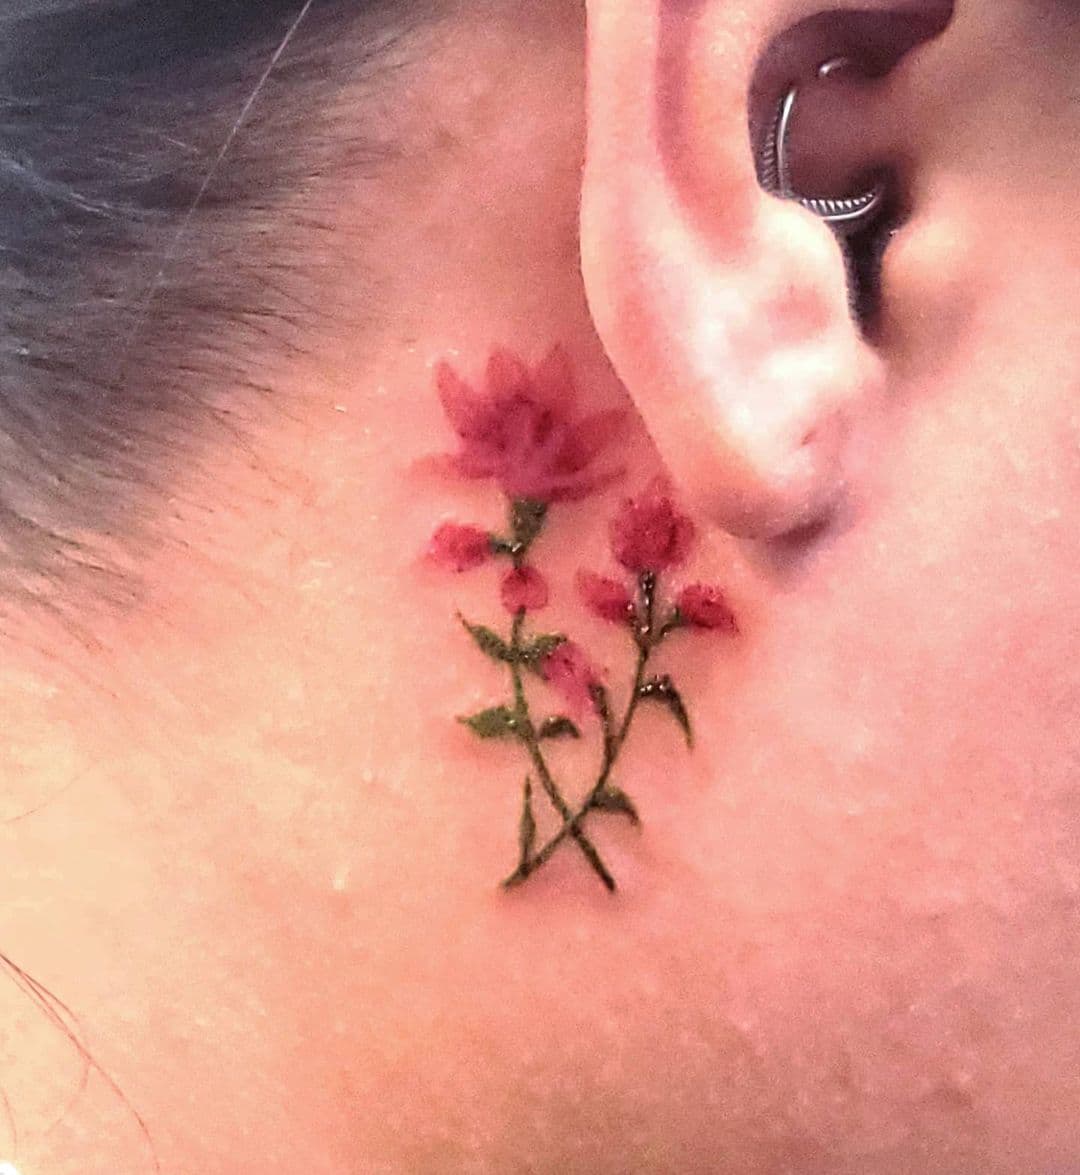 Flower behind the tattoo hero tattoo 2